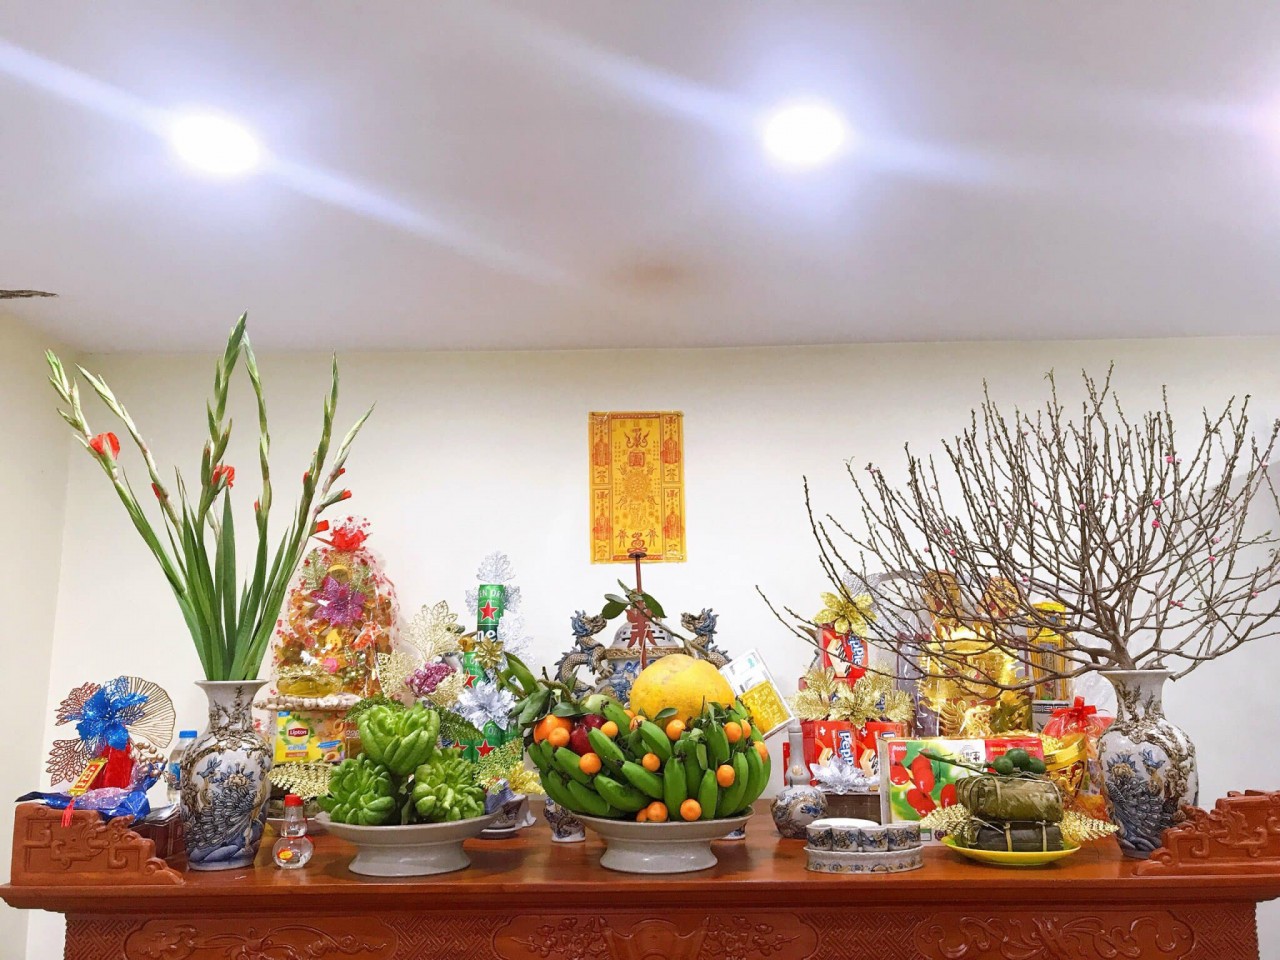 The spirit of Tet Holiday in Different Regions along Vietnam